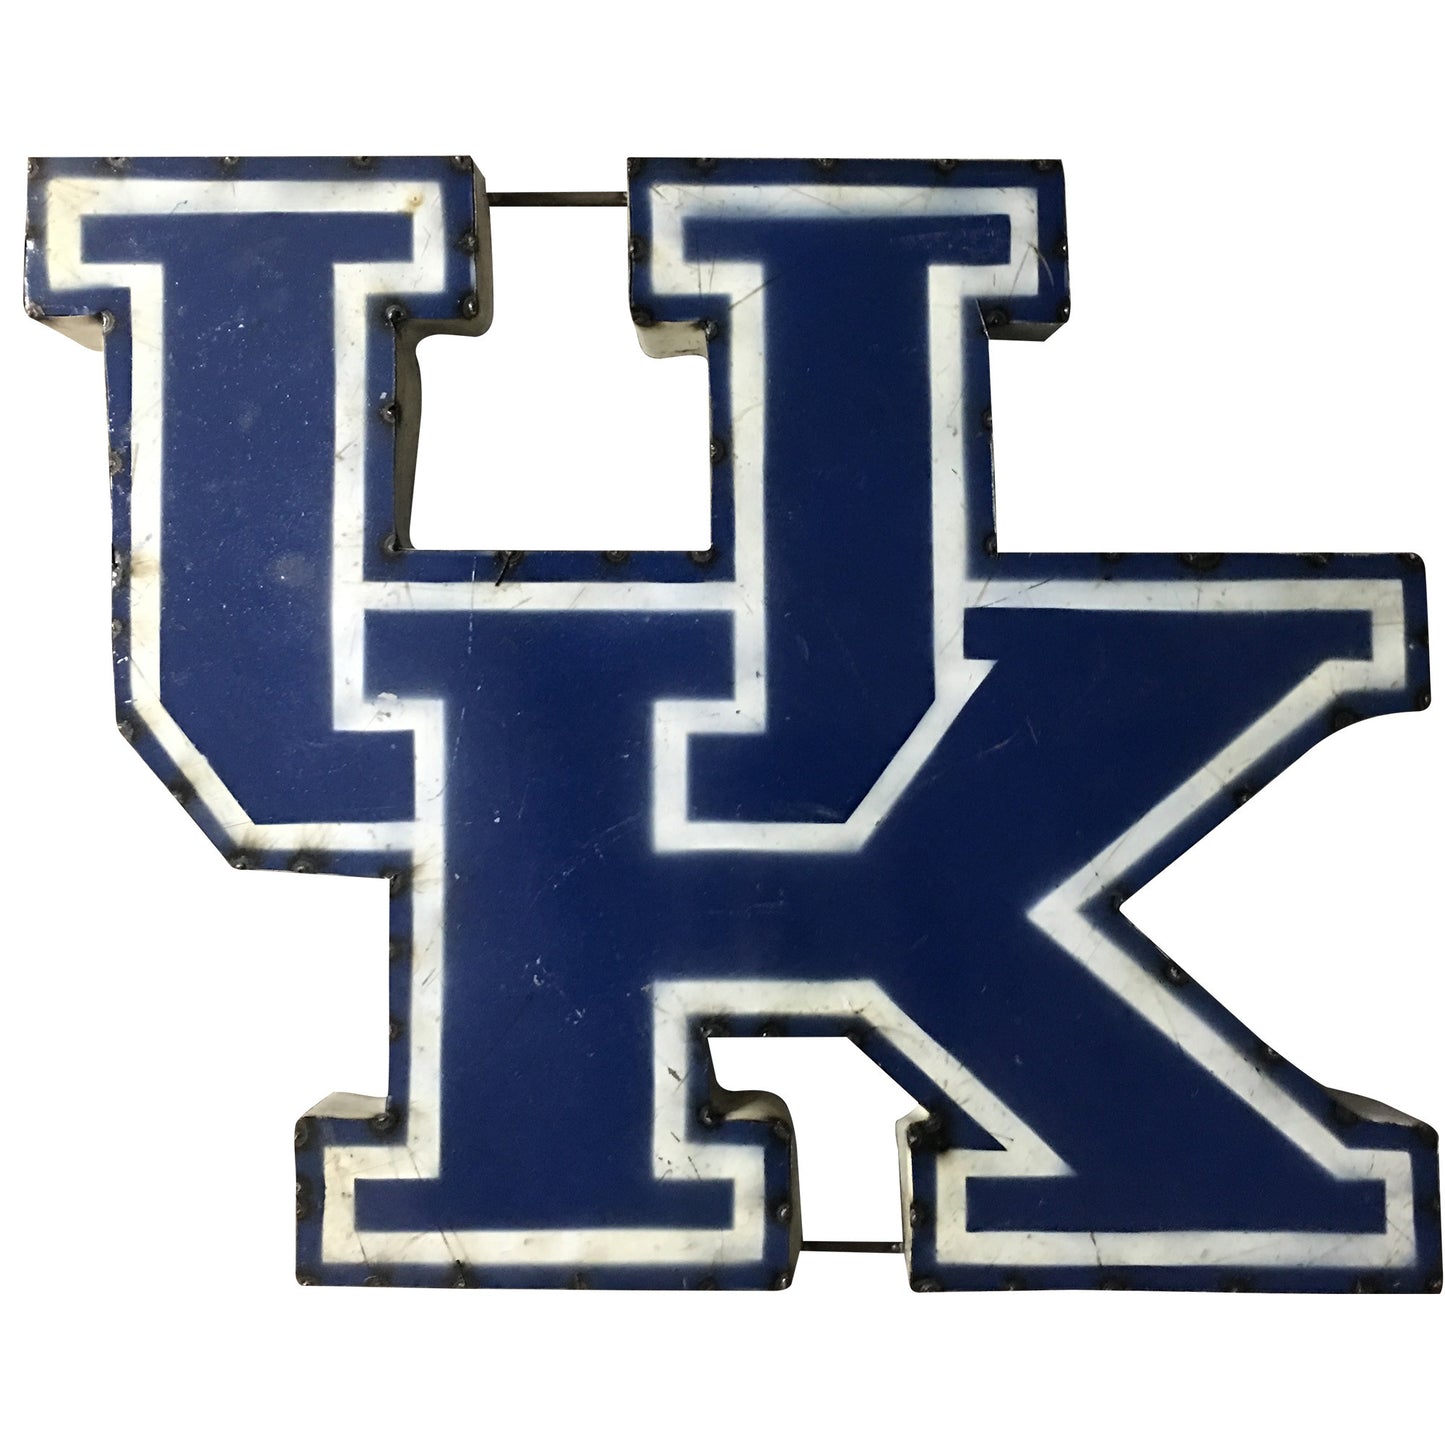 University of Kentucky "UK" Recycled Metal Wall Decor